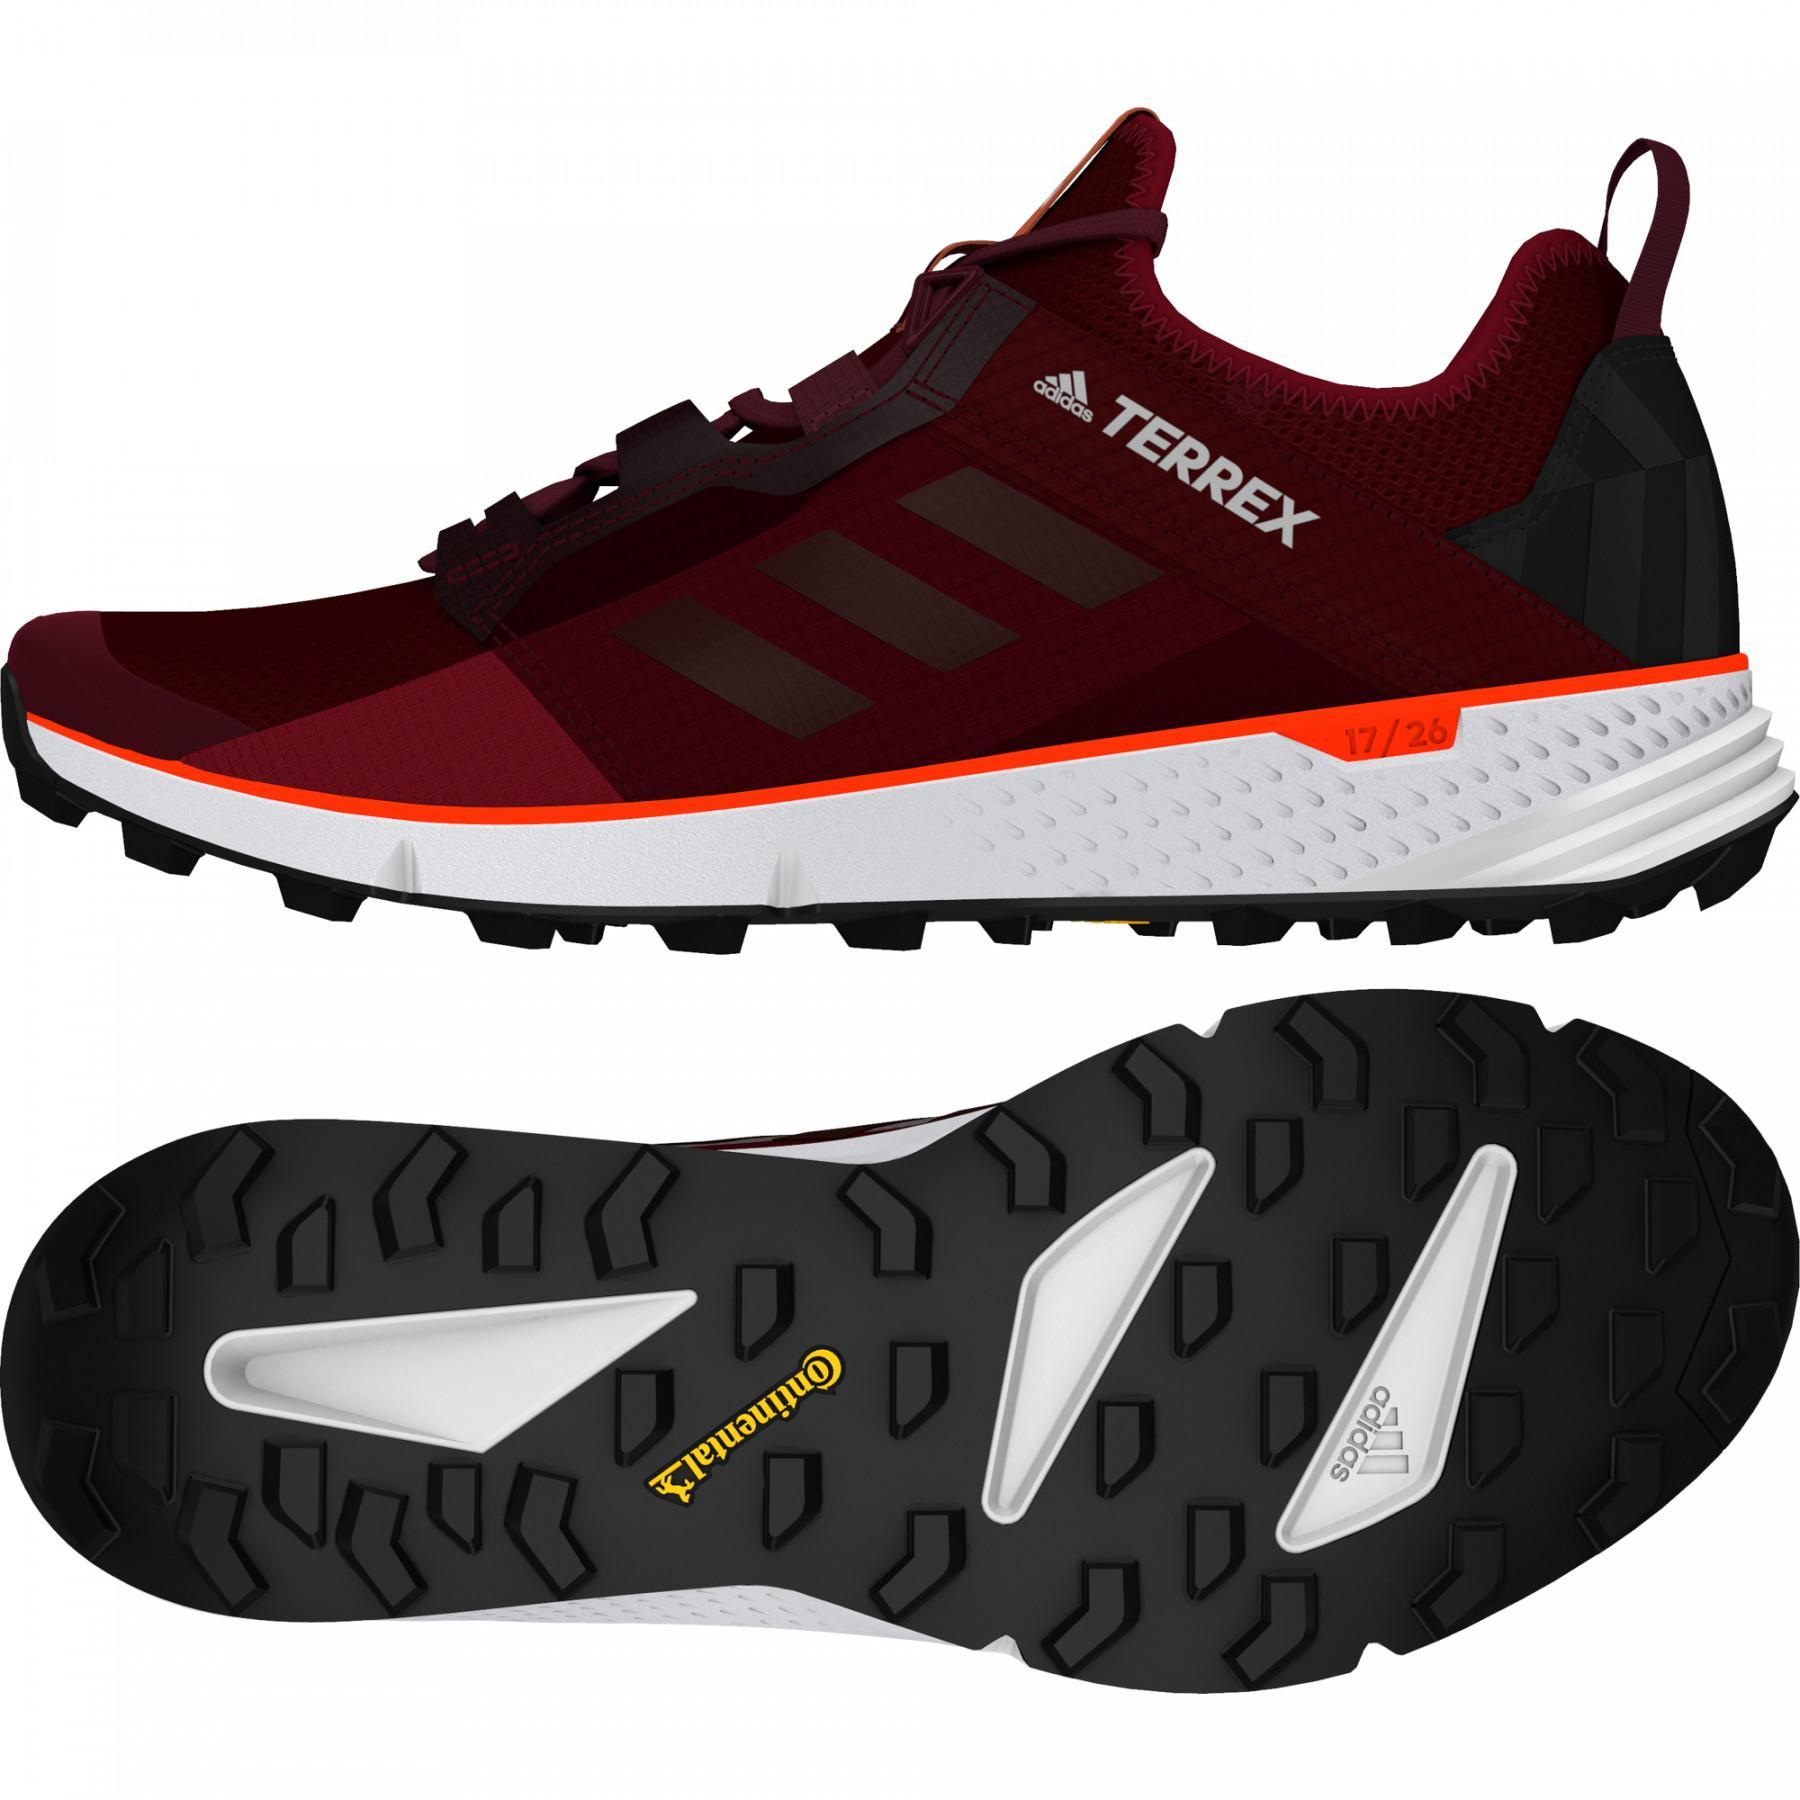 Trail shoes adidas Terrex Speed LD